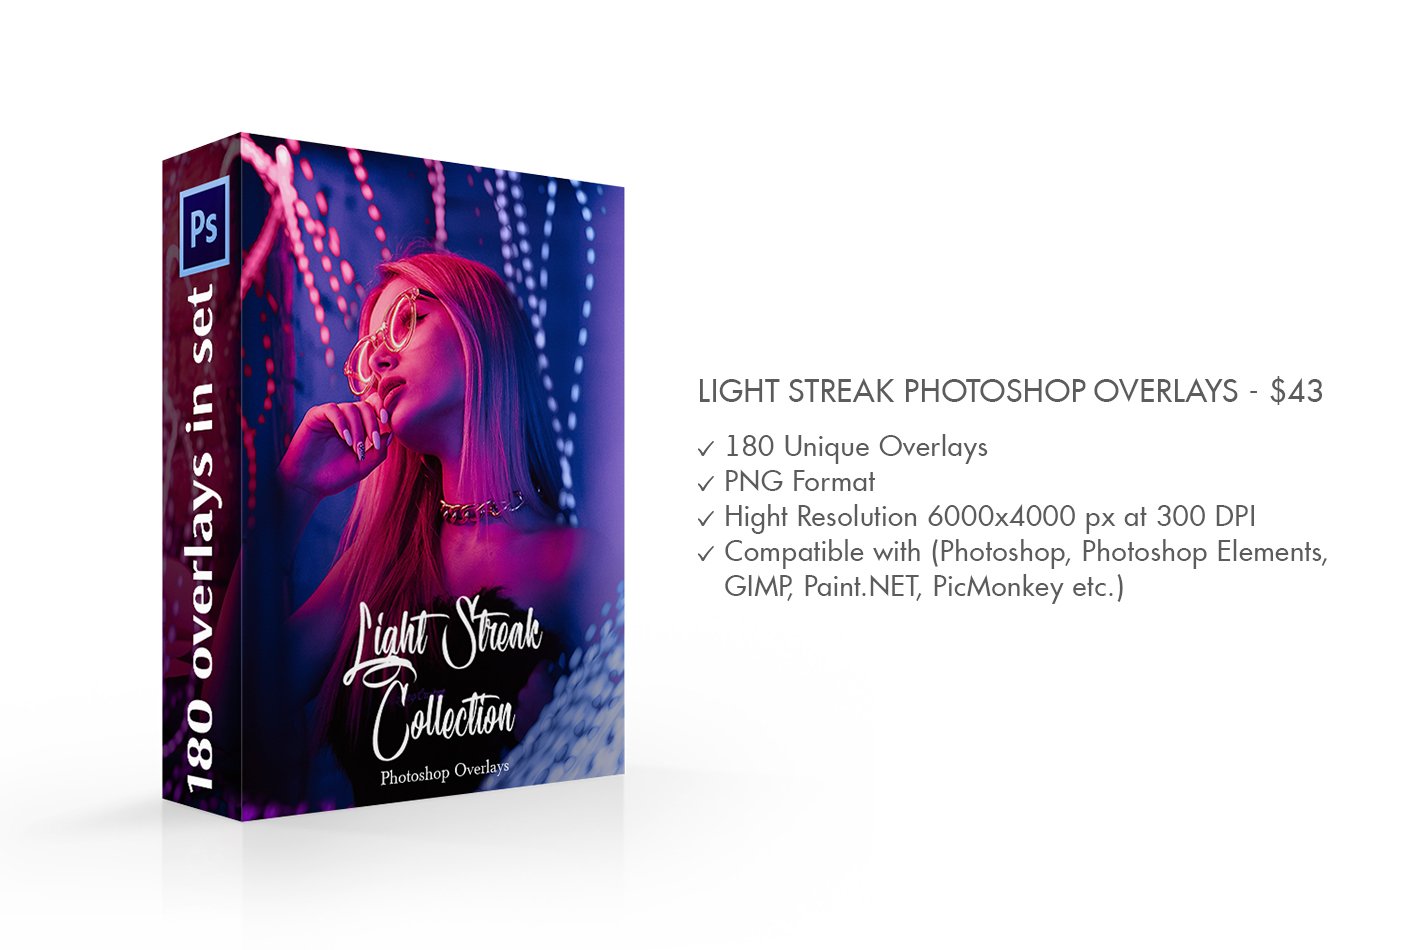 Light Streak Photoshop Overlayspreview image.